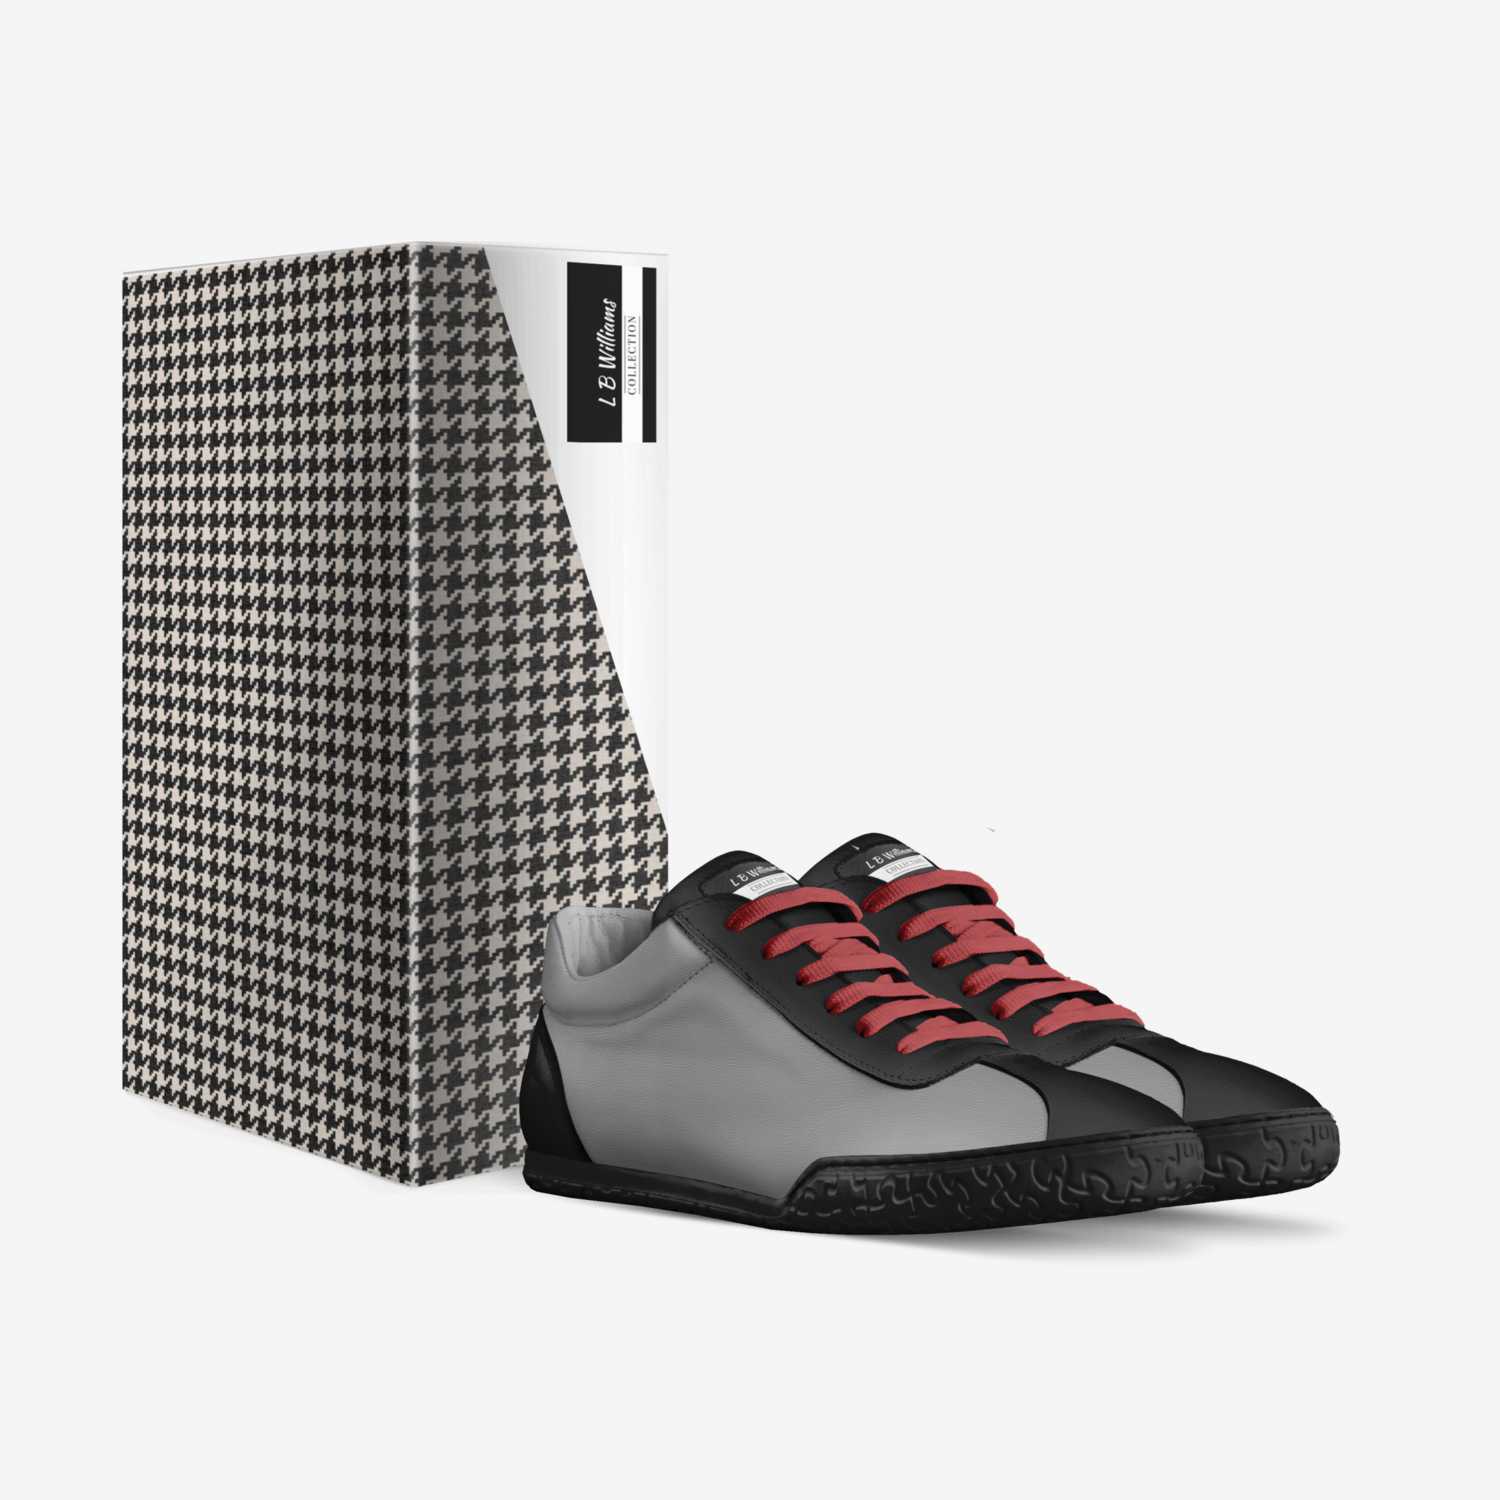 L.RAEKO custom made in Italy shoes by Lanon Raeko | Box view